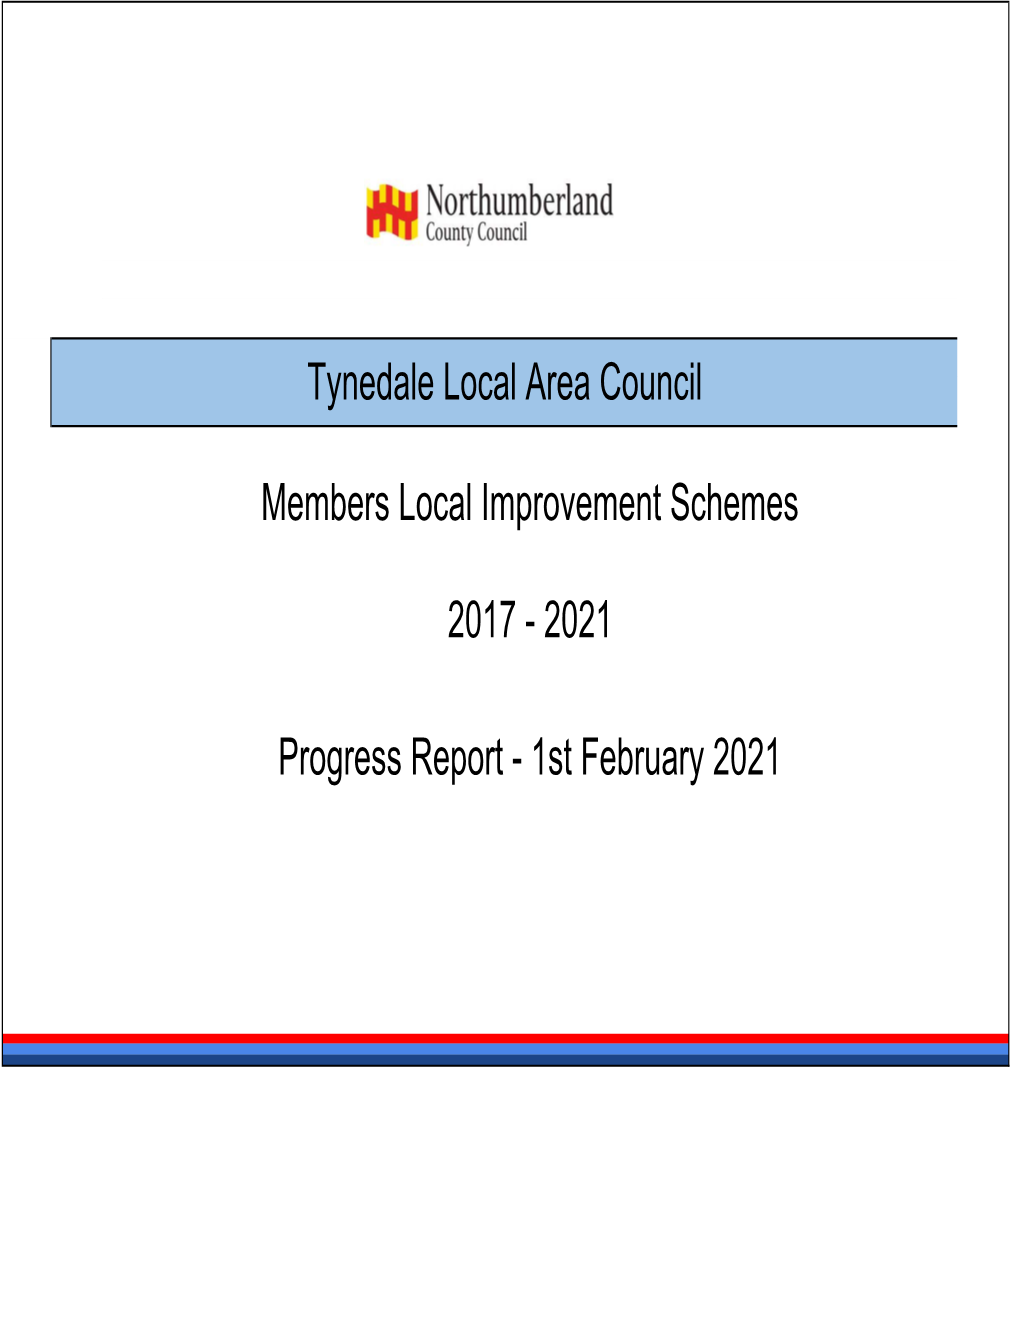 Members Local Improvement Schemes